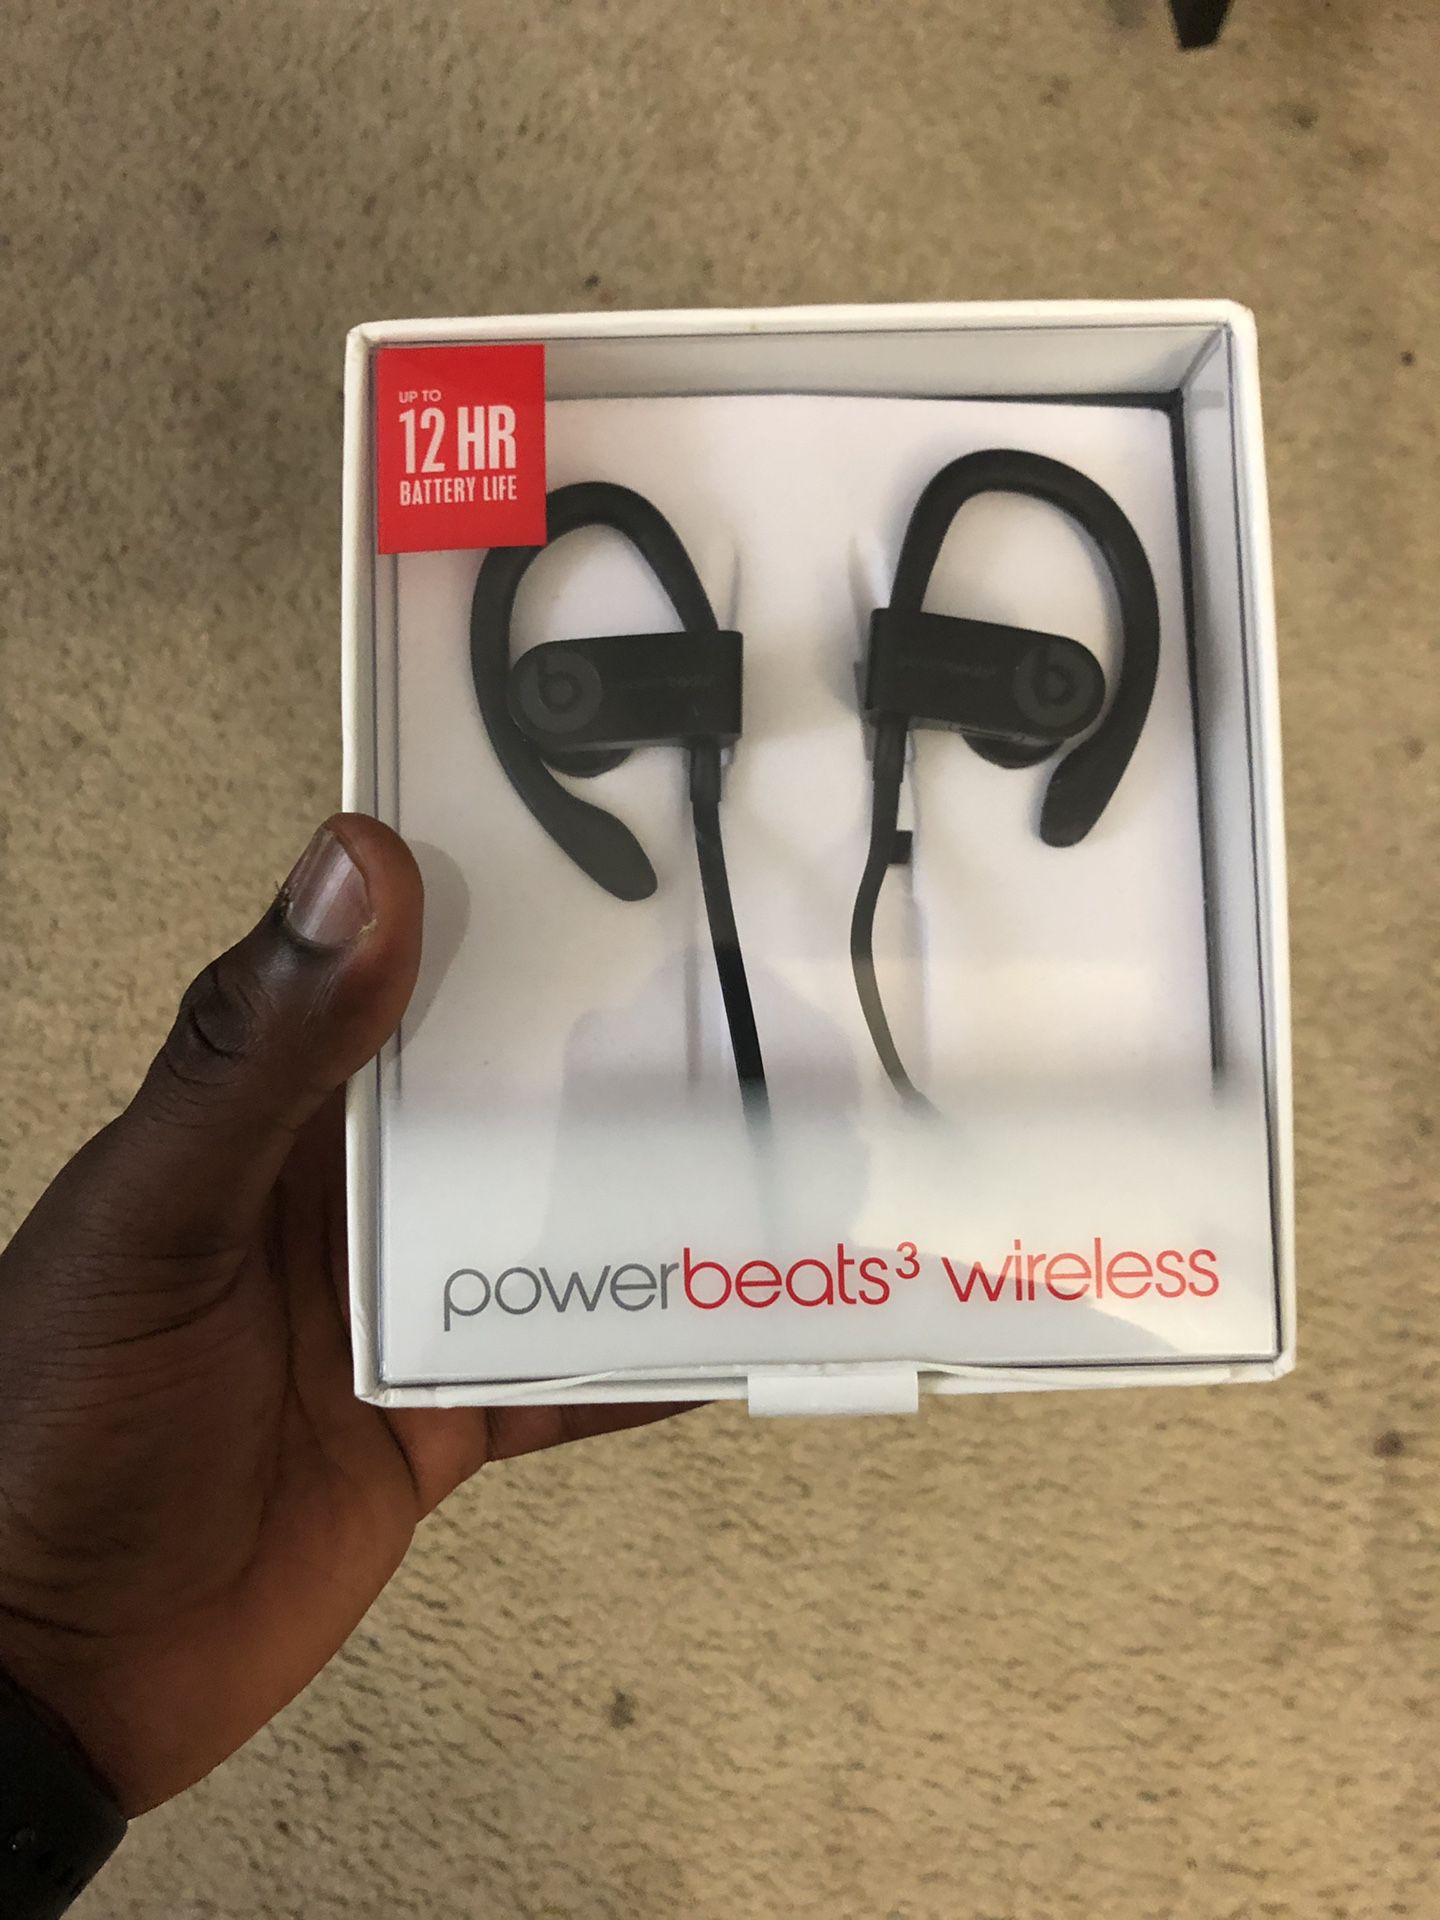 PowerBeats 3 Wireless headphones